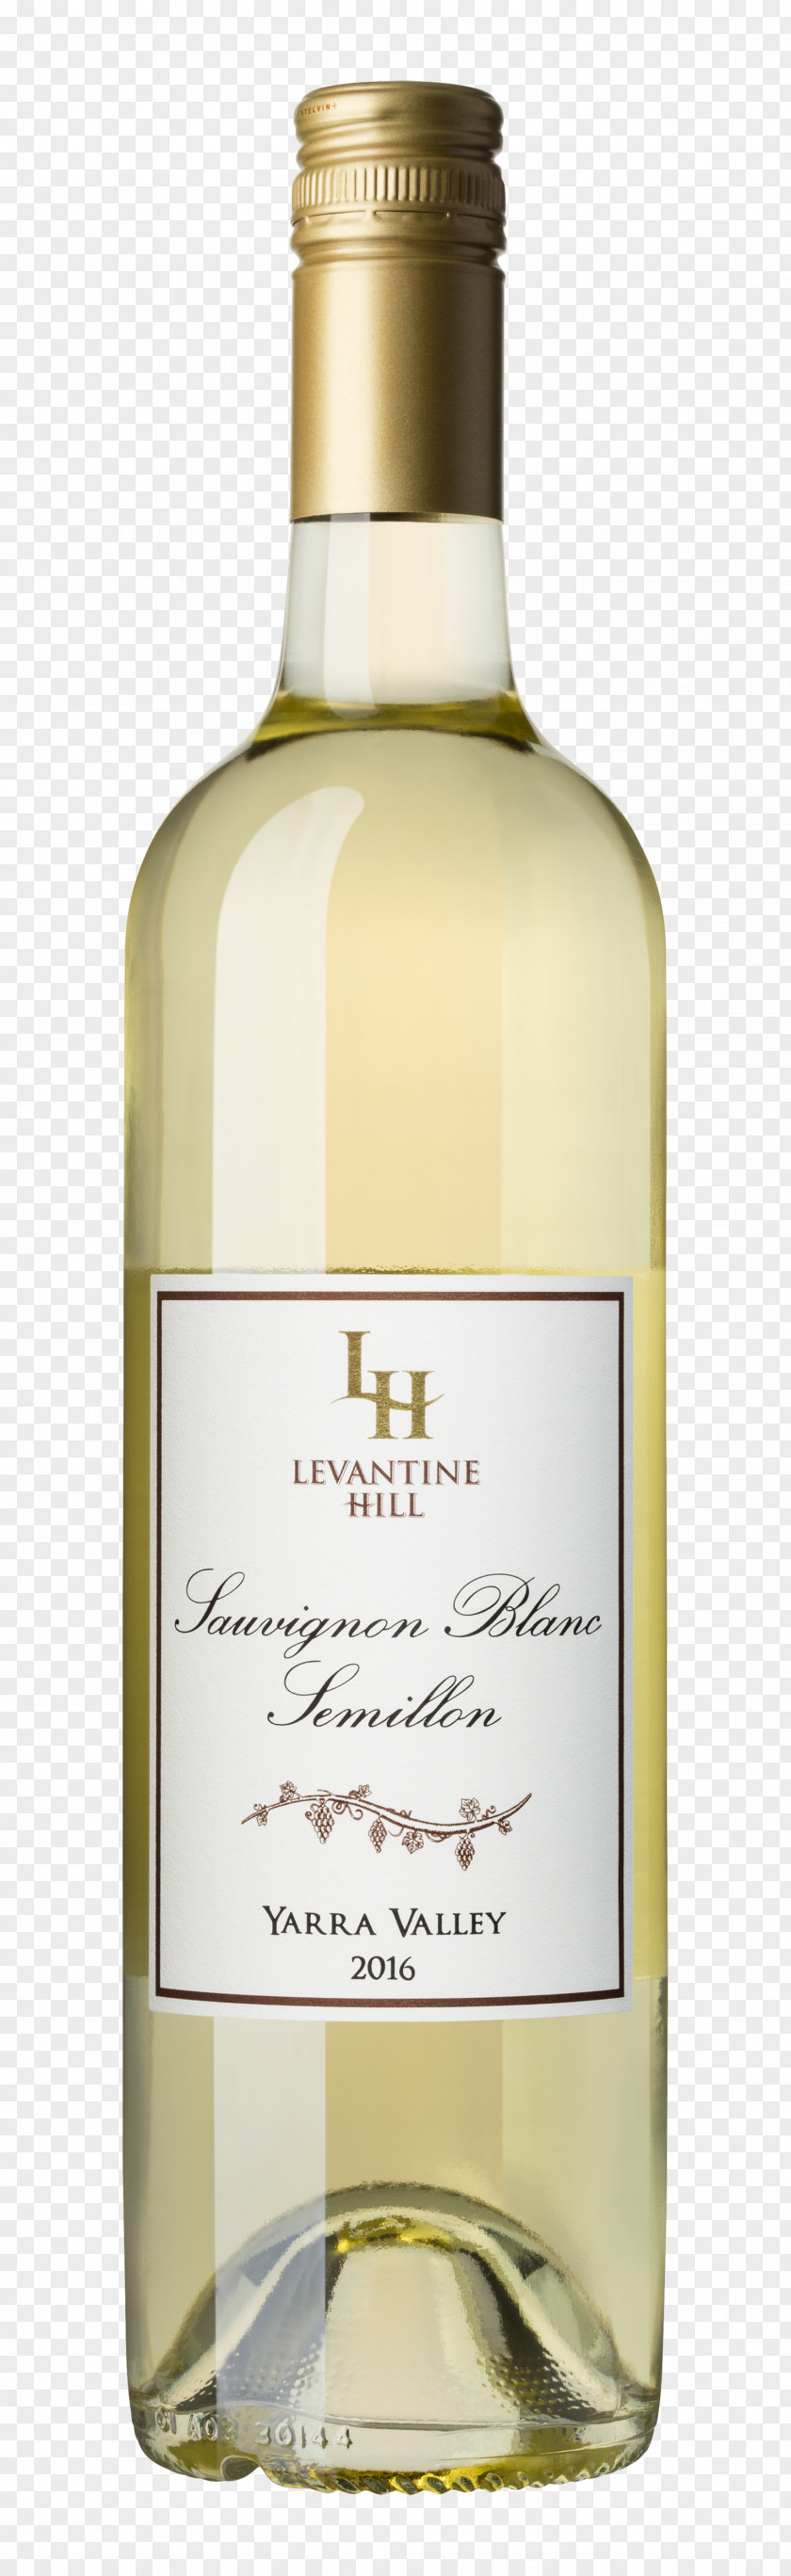 Wine White Auxerrois Blanc Sauvignon Sémillon PNG